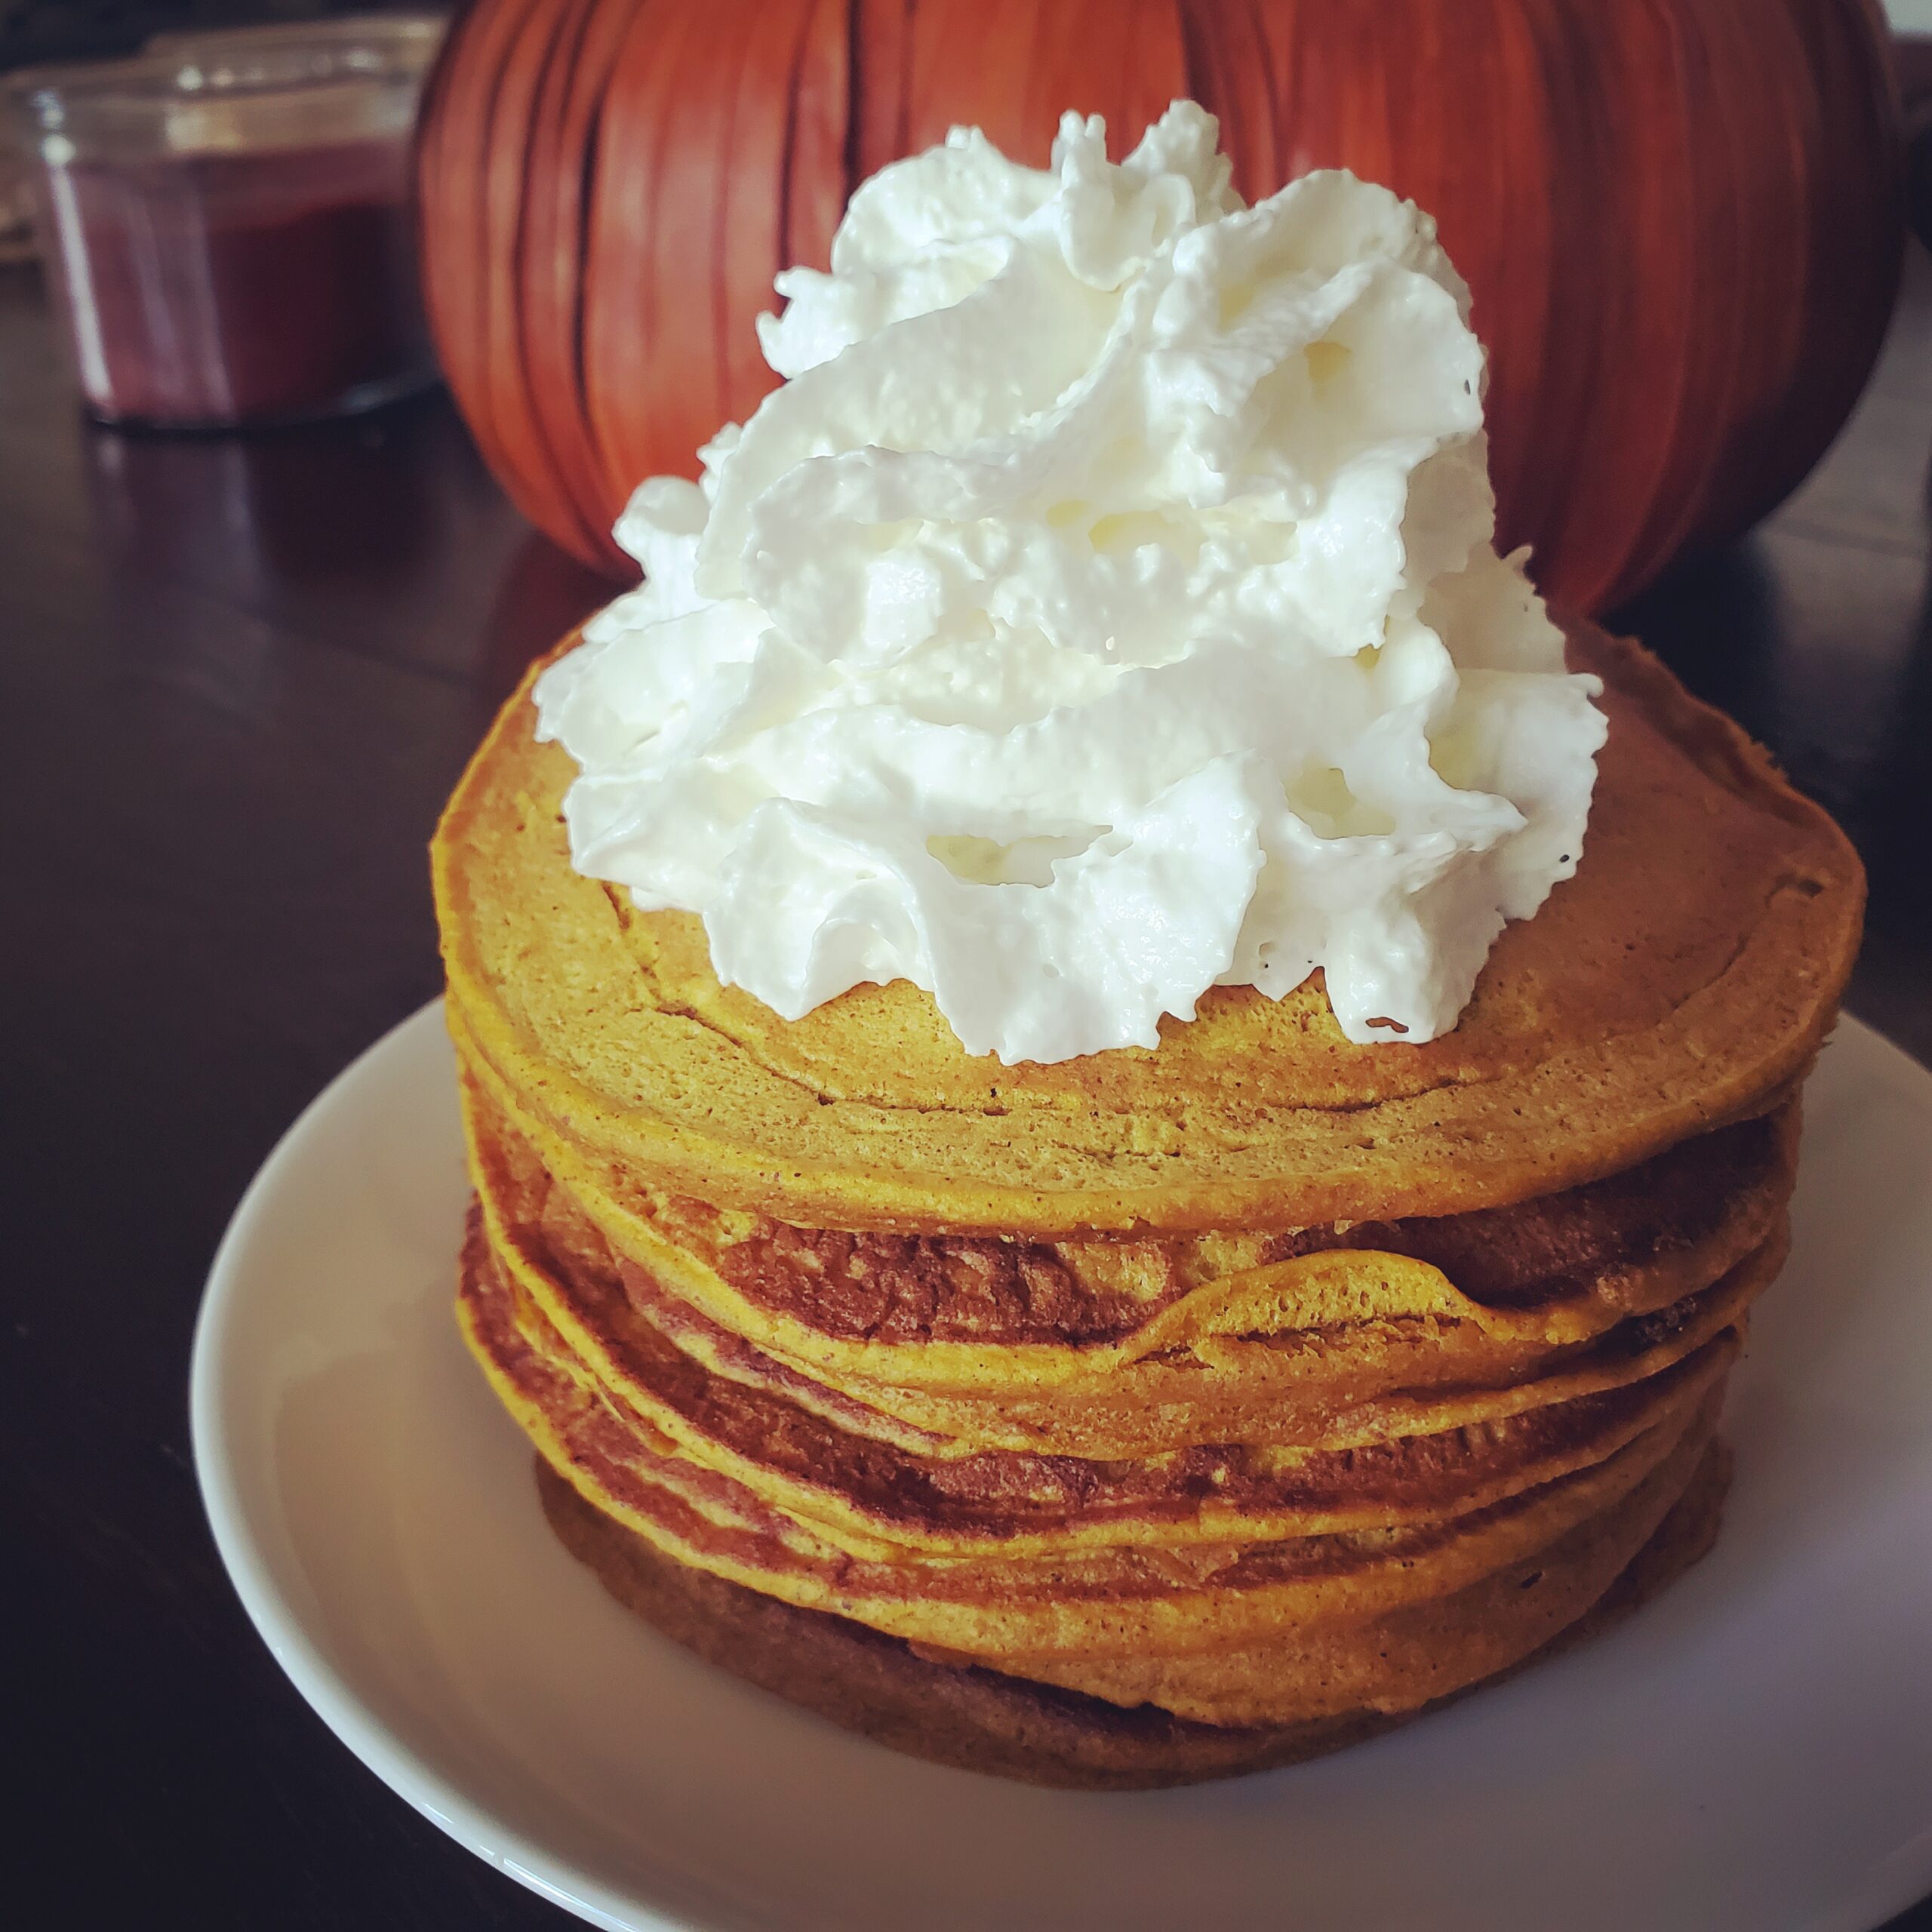 Pumpkin Pie Pancakes